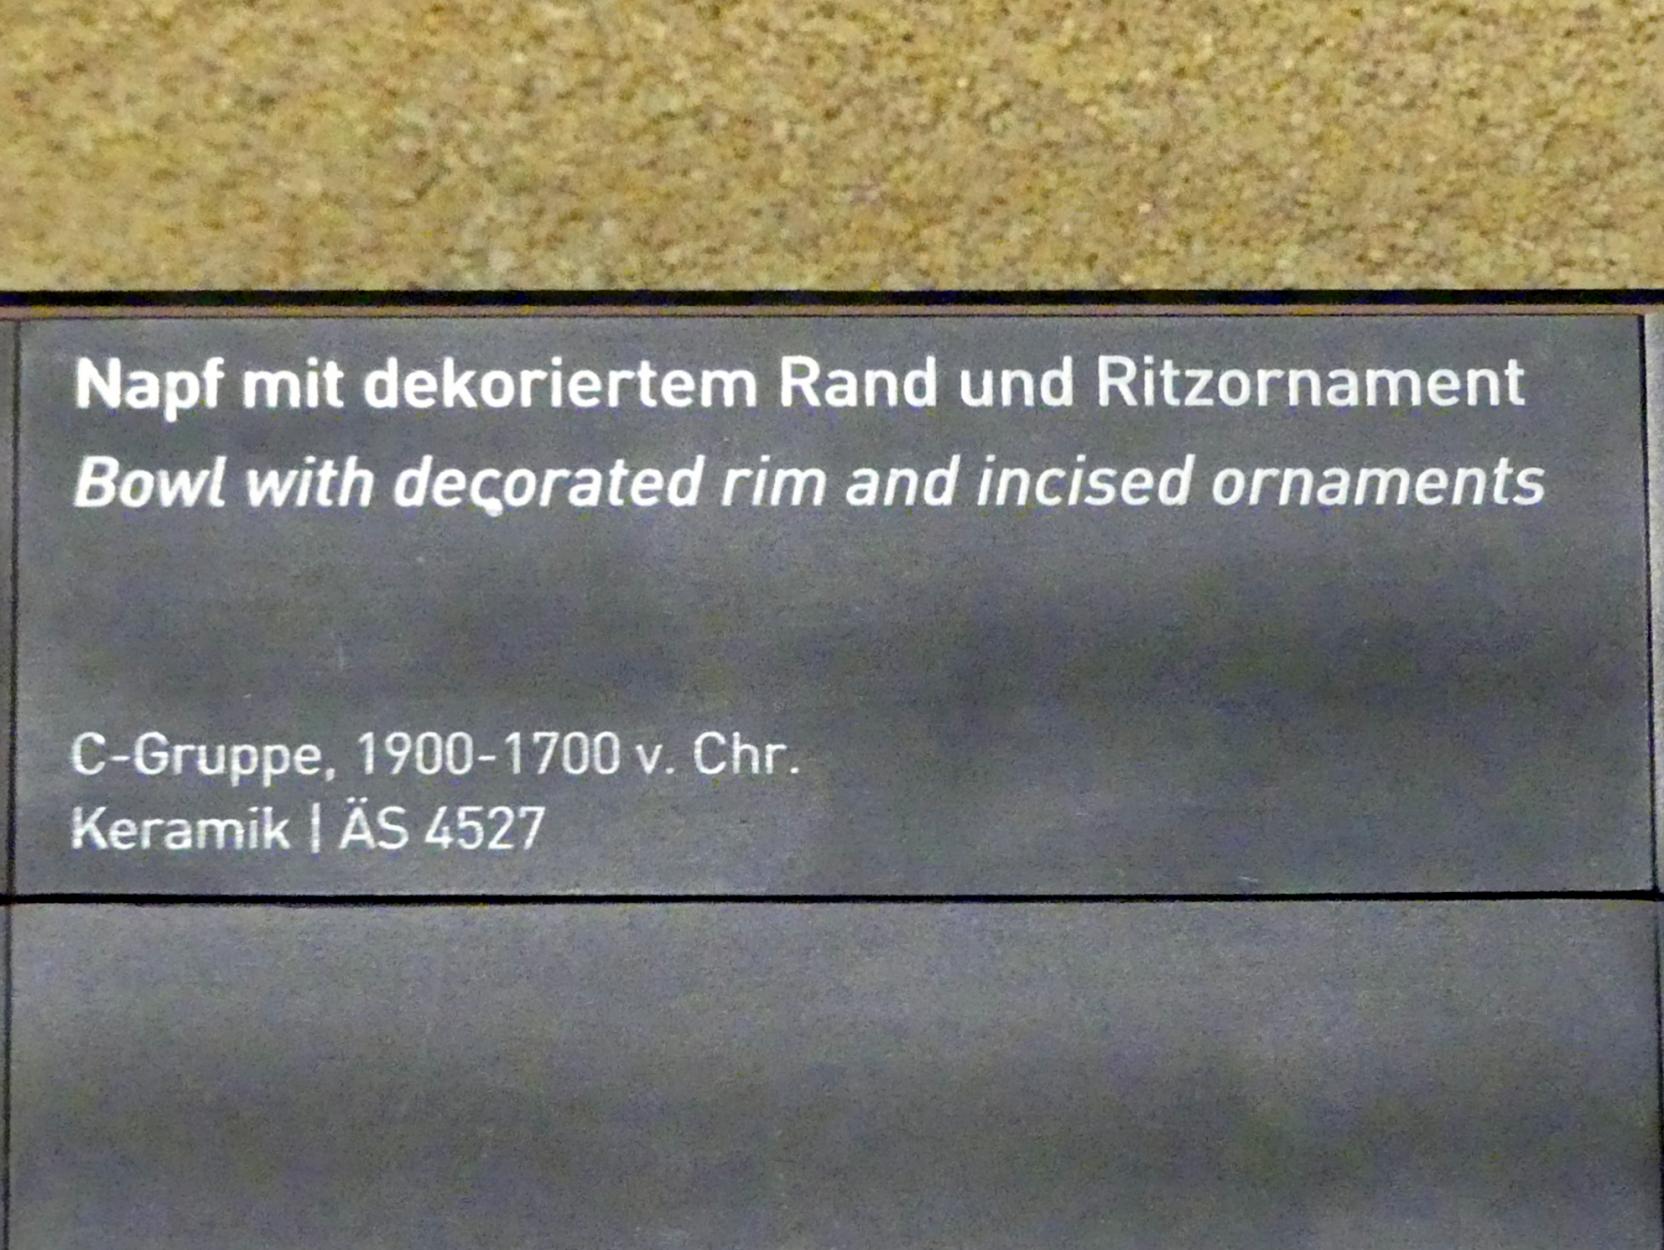 Napf mit dekoriertem Rand und Ritzornament, C-Gruppe, 1900 - 1550 v. Chr., 1900 - 1700 v. Chr., Bild 2/2